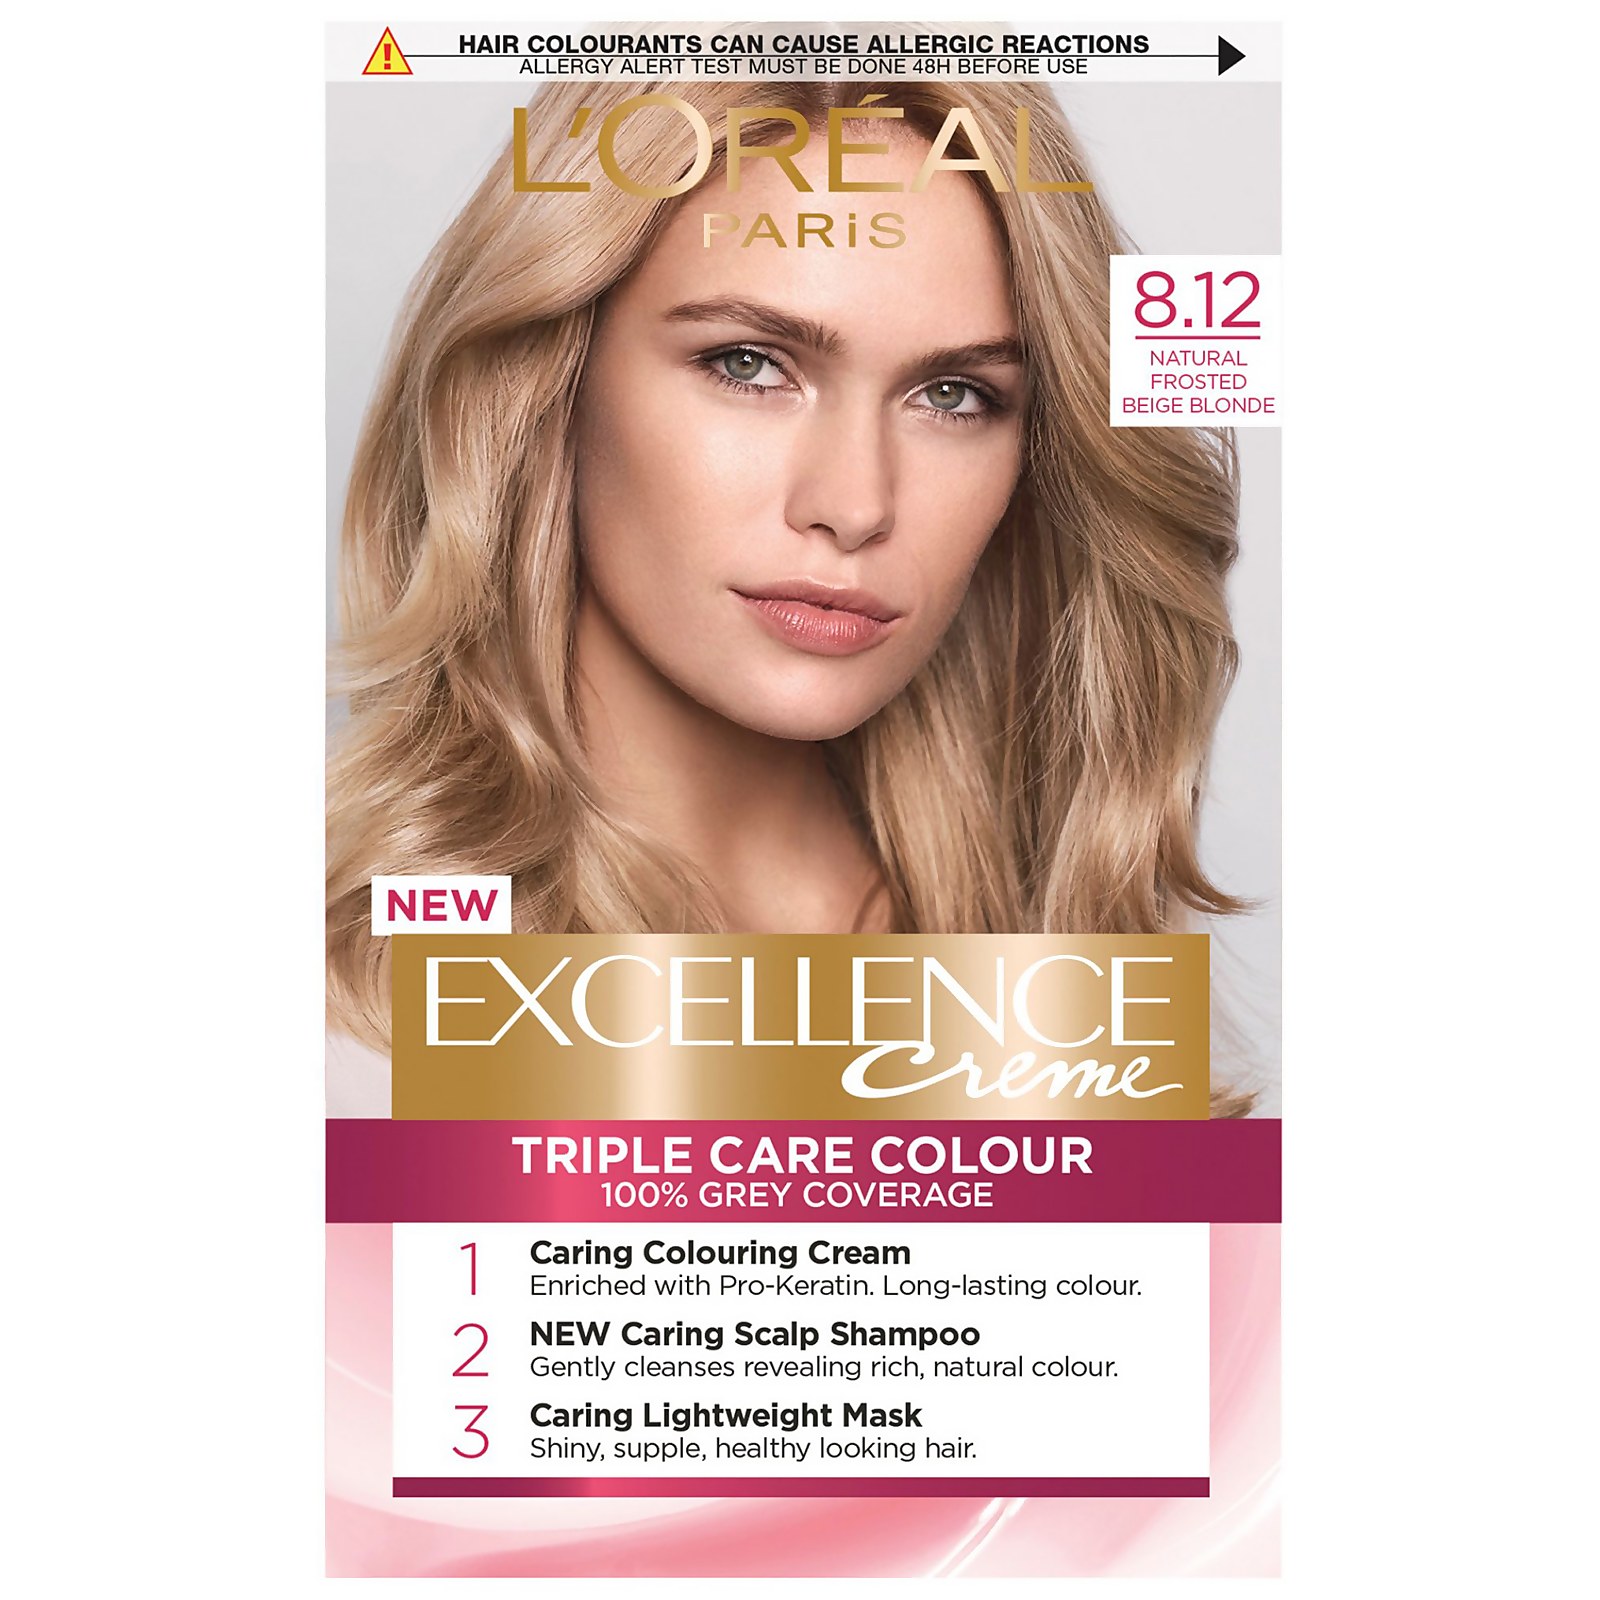 Photos - Hair Product LOreal L'Oréal Paris Excellence Crème Permanent Hair Dye  - 8.12 (Various Shades)